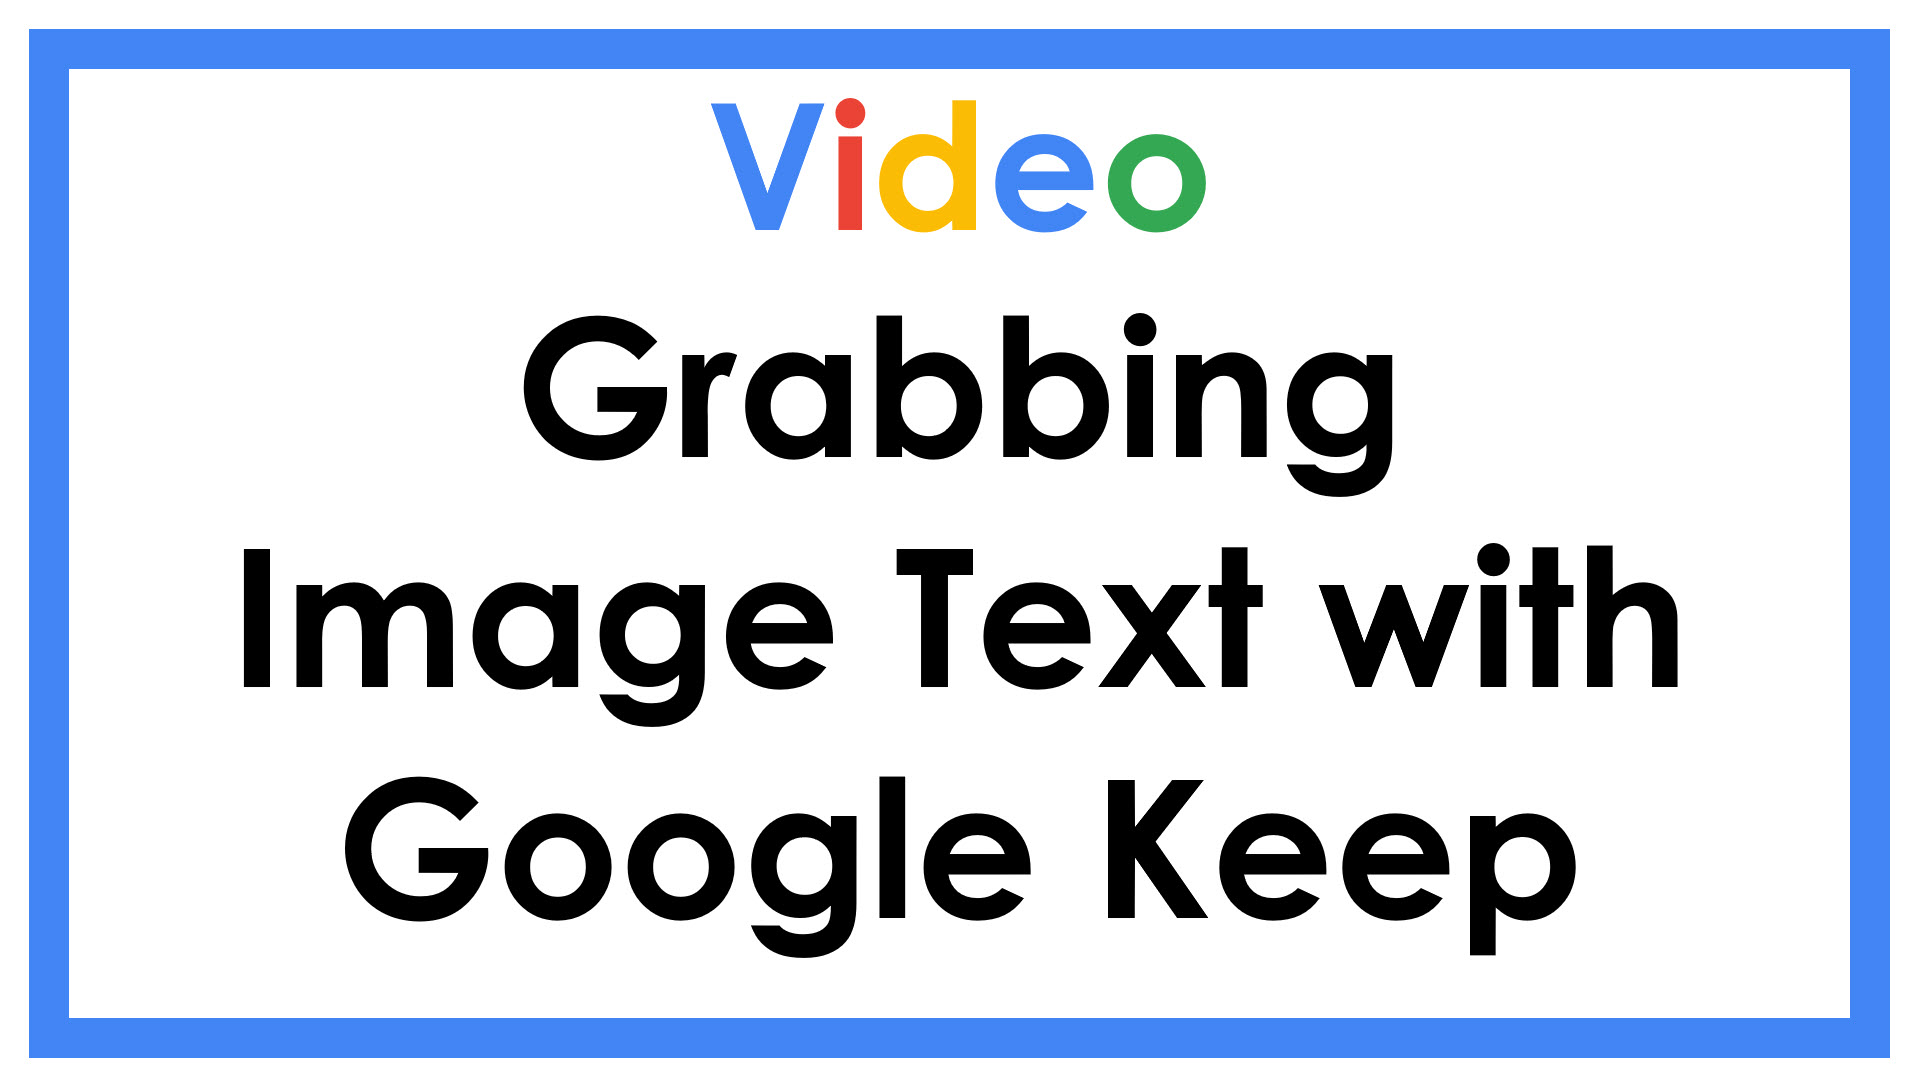 Grabbing Image Text with Google Keep